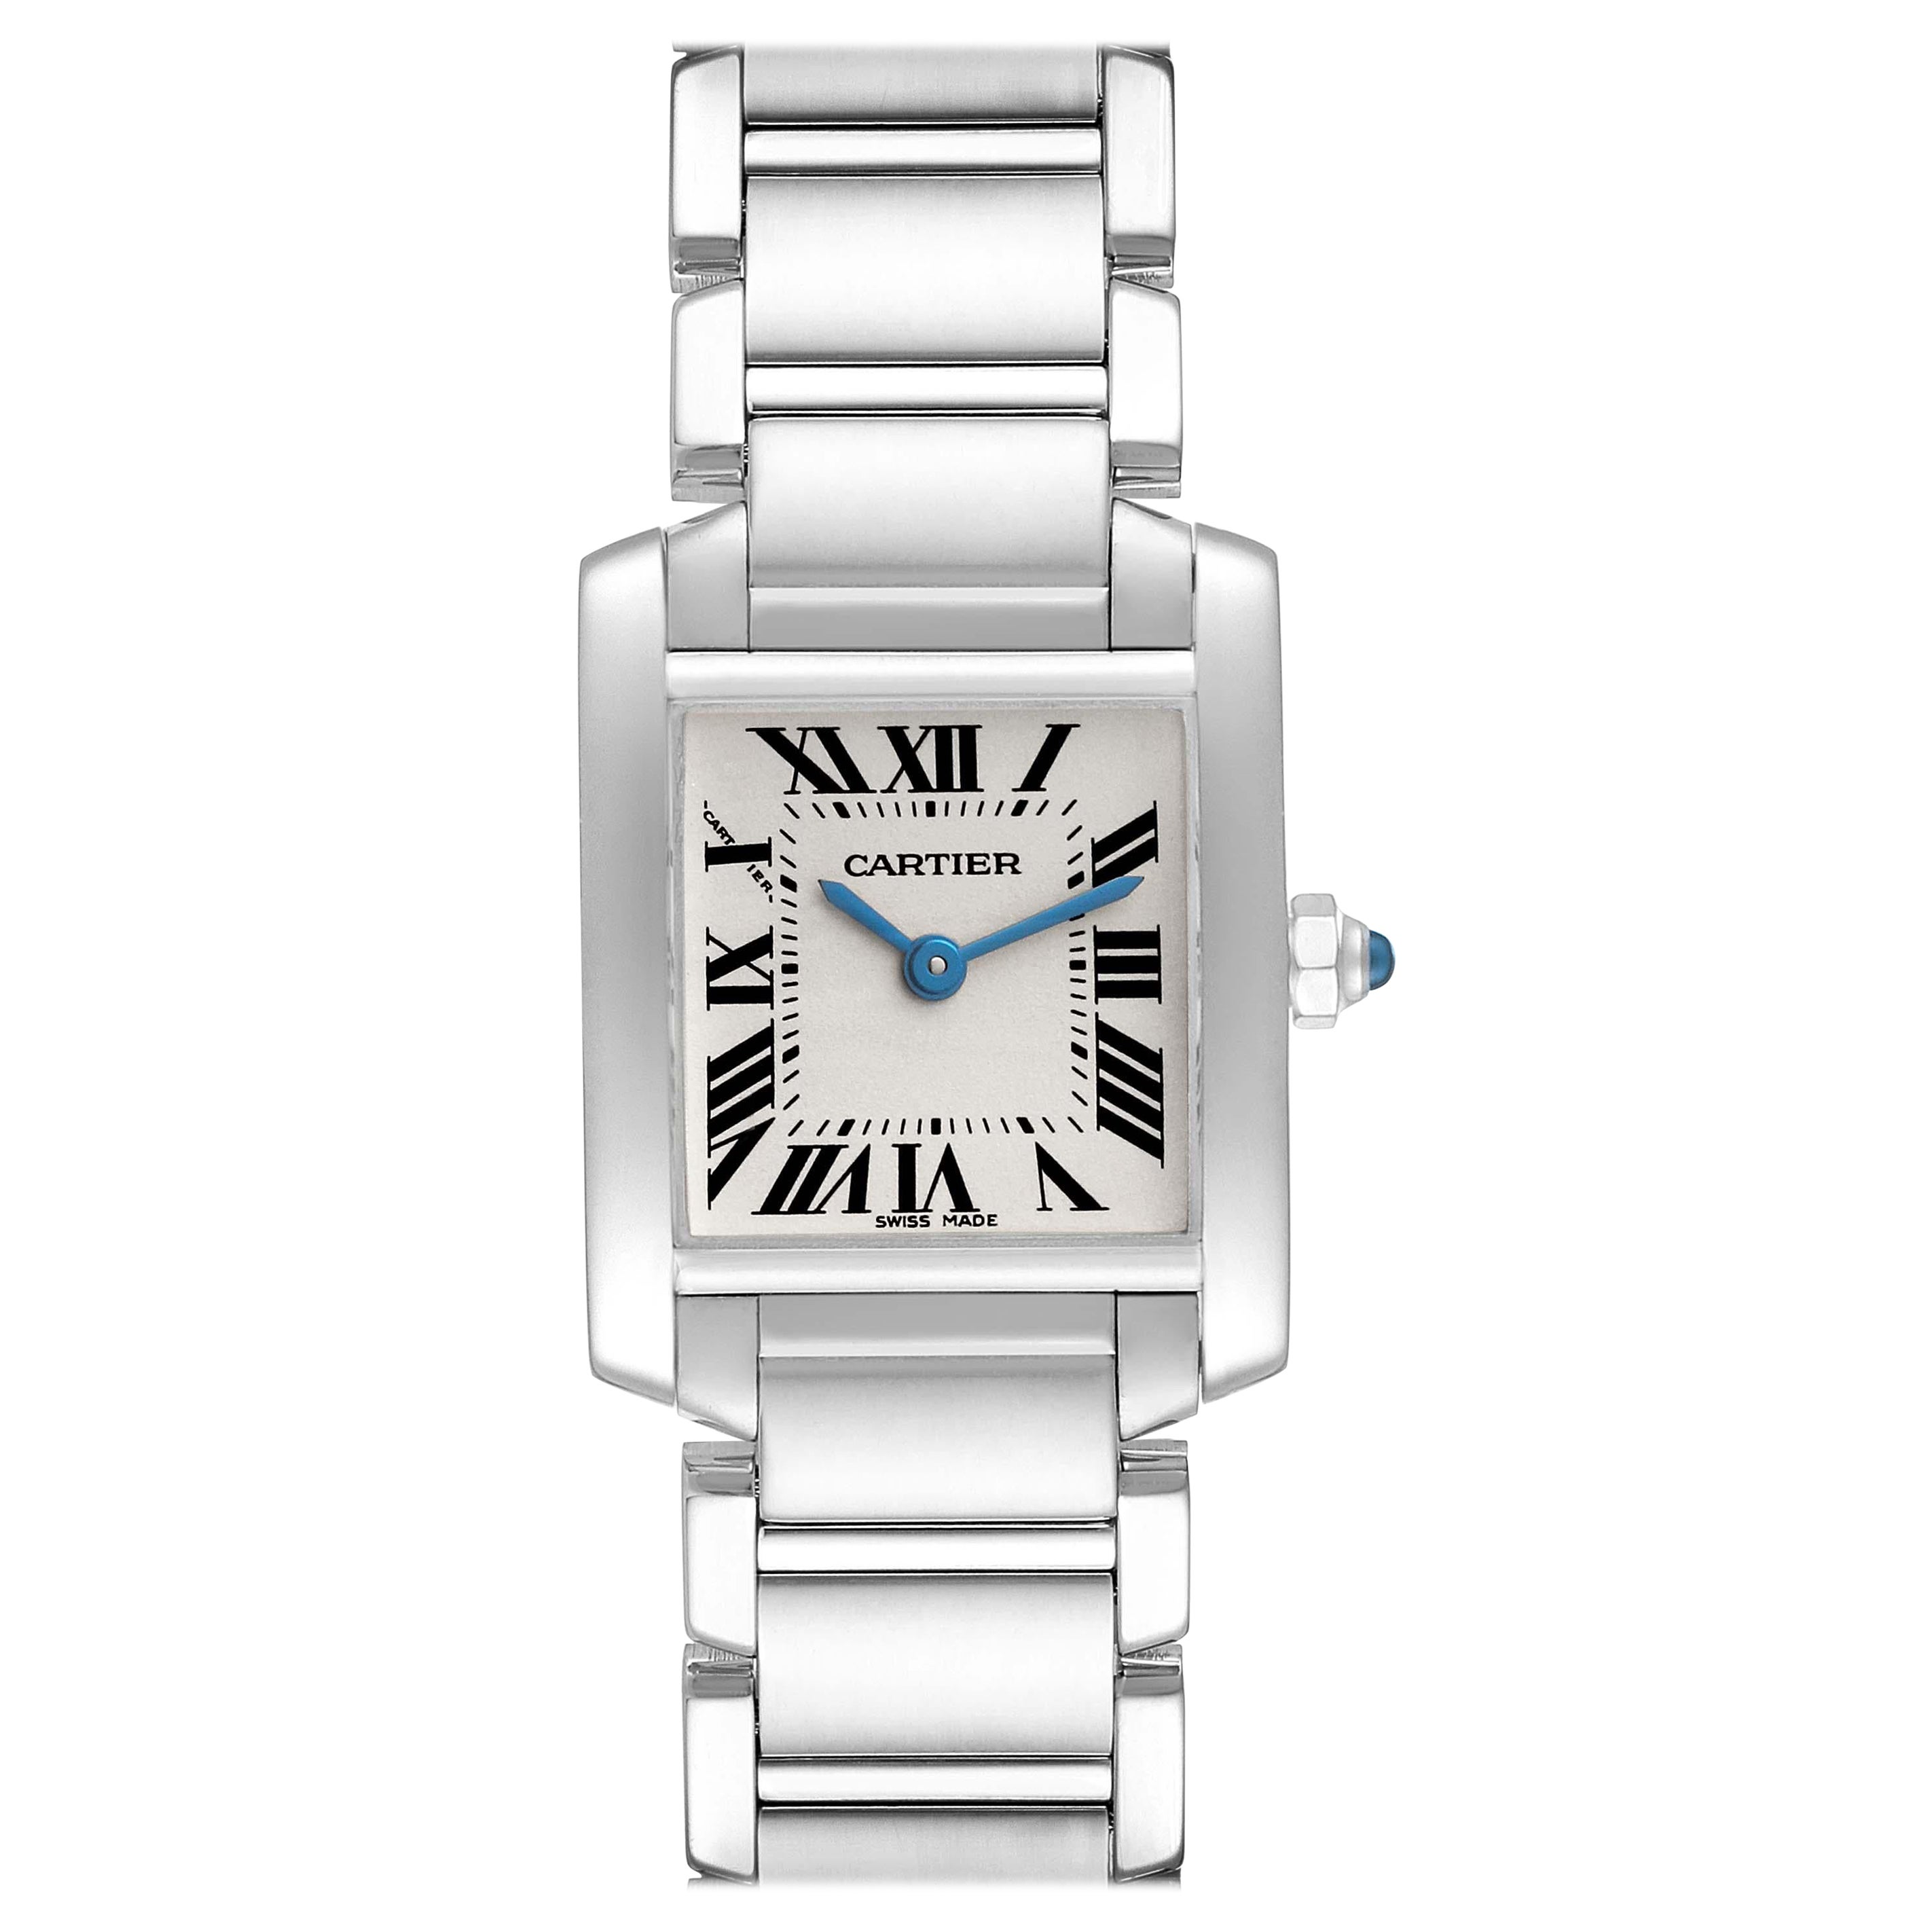 Cartier Tank Francaise White Gold Quartz Ladies Watch W50012S3 Box Papers For Sale